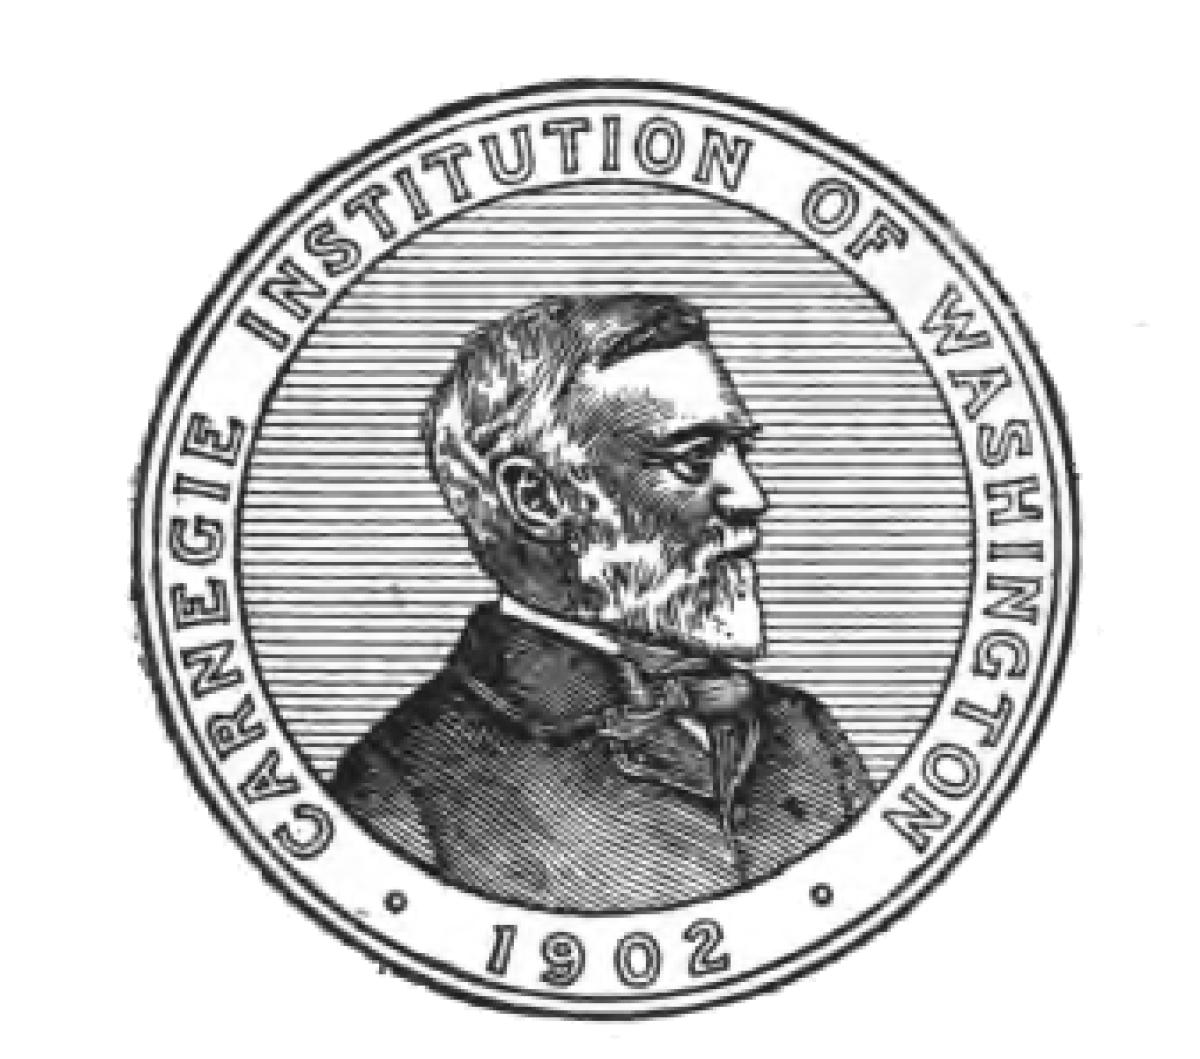 Publisher's medallion